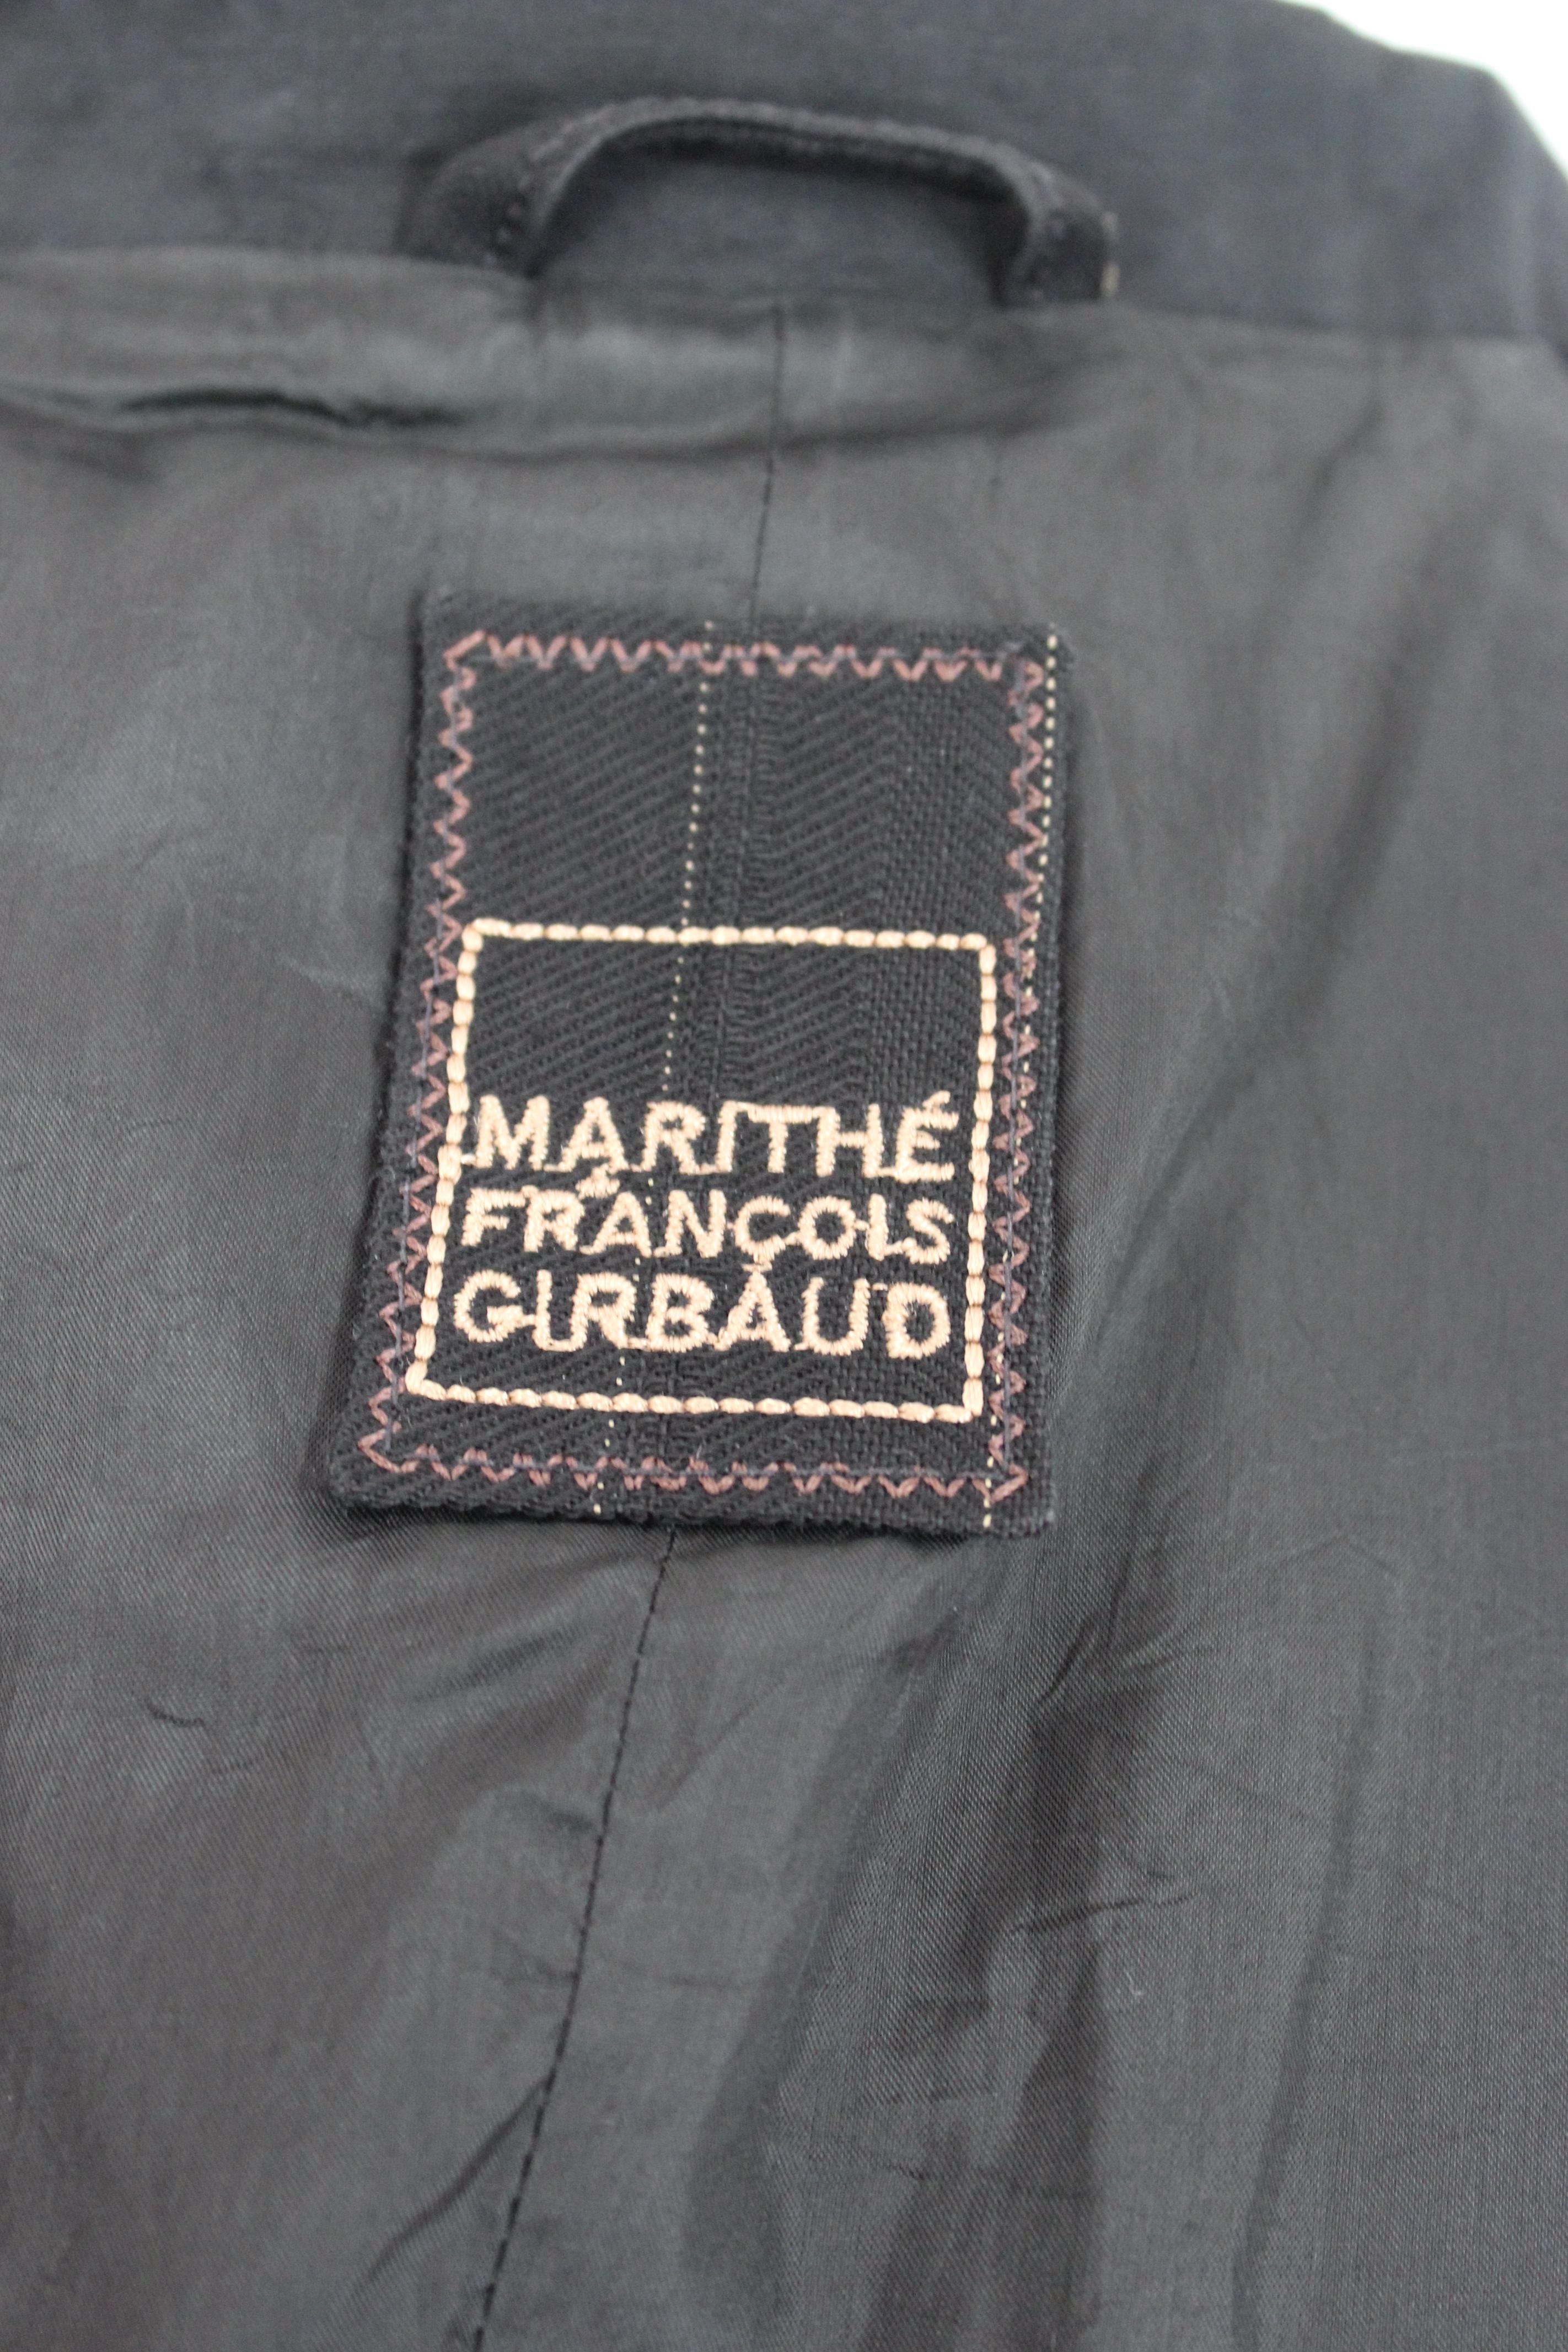 Women's Marithe Francois Girbaud Black Beige Cotton Striped Jacket